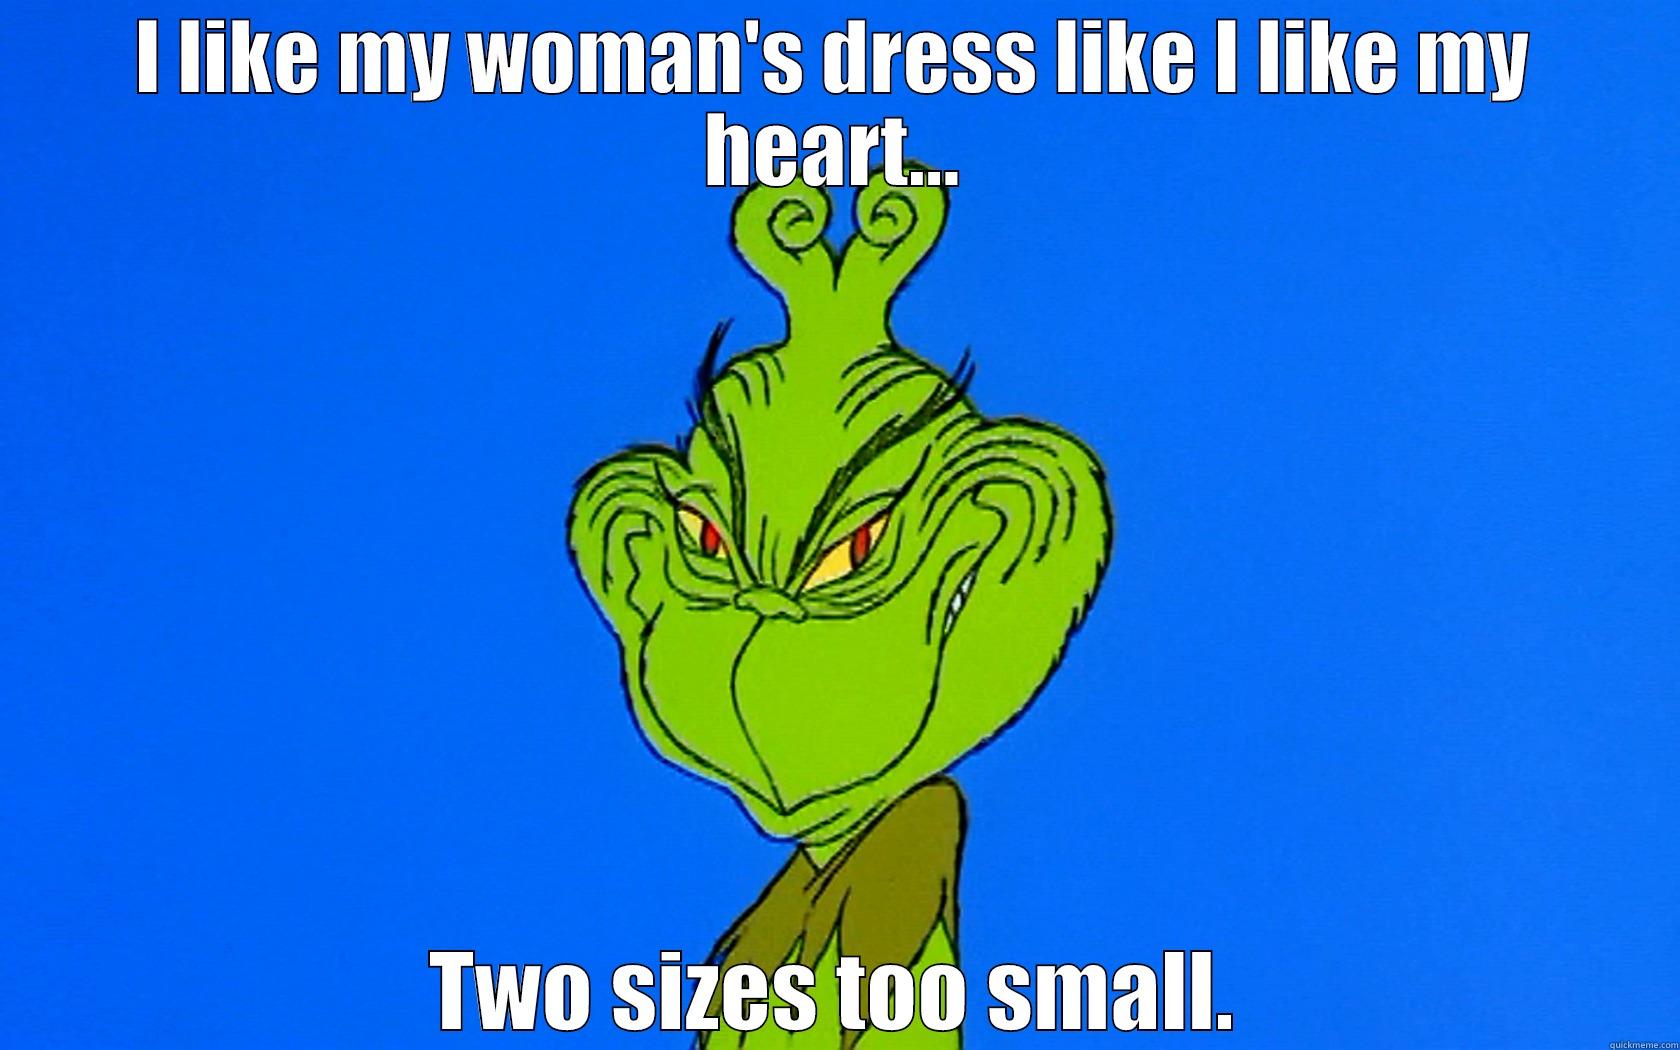 Grinch on women - I LIKE MY WOMAN'S DRESS LIKE I LIKE MY HEART... TWO SIZES TOO SMALL. Misc